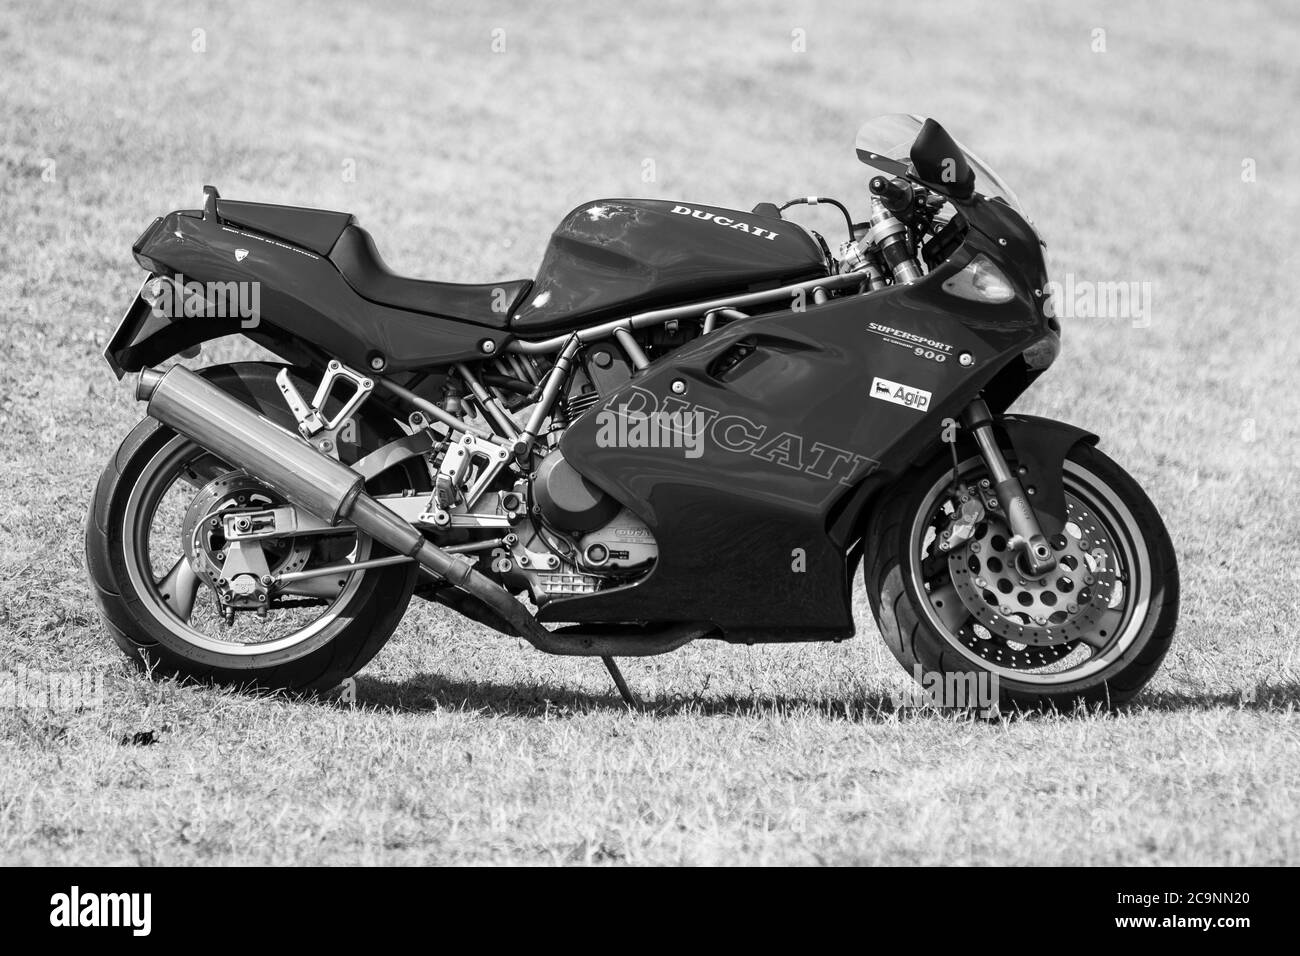 Ducati Supersport 900 SS Banque D'Images